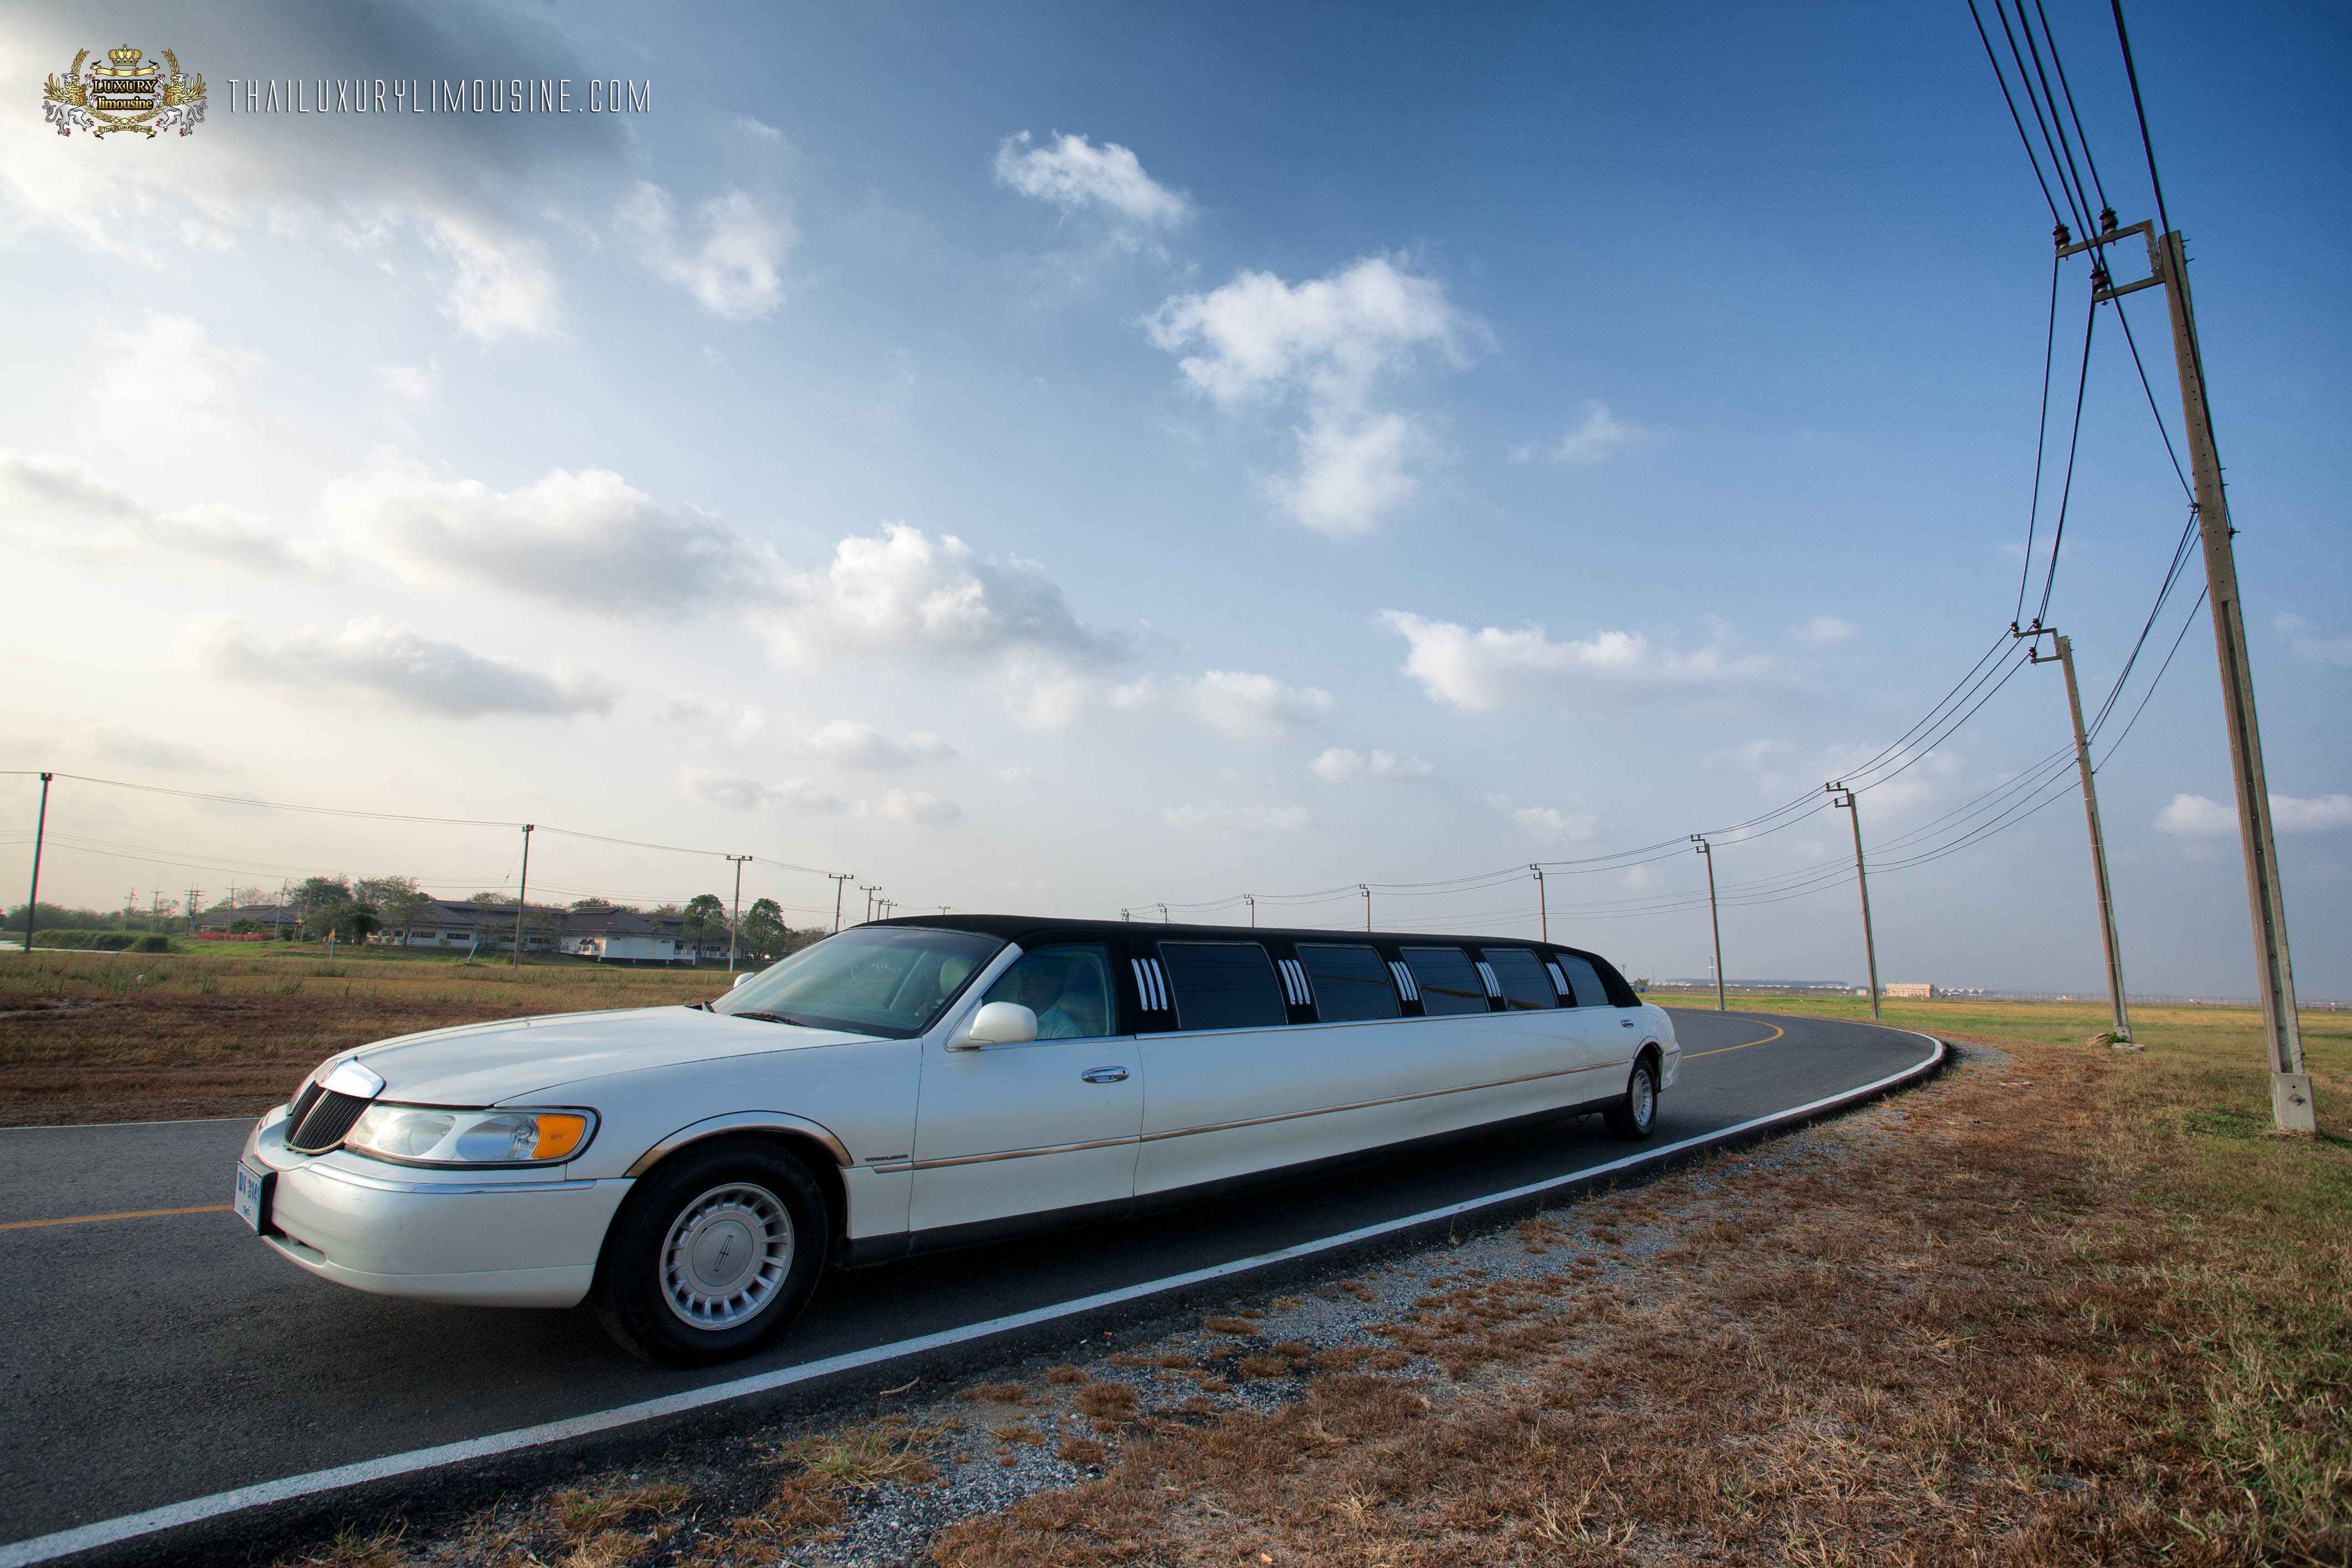 Luxury Limousine Service